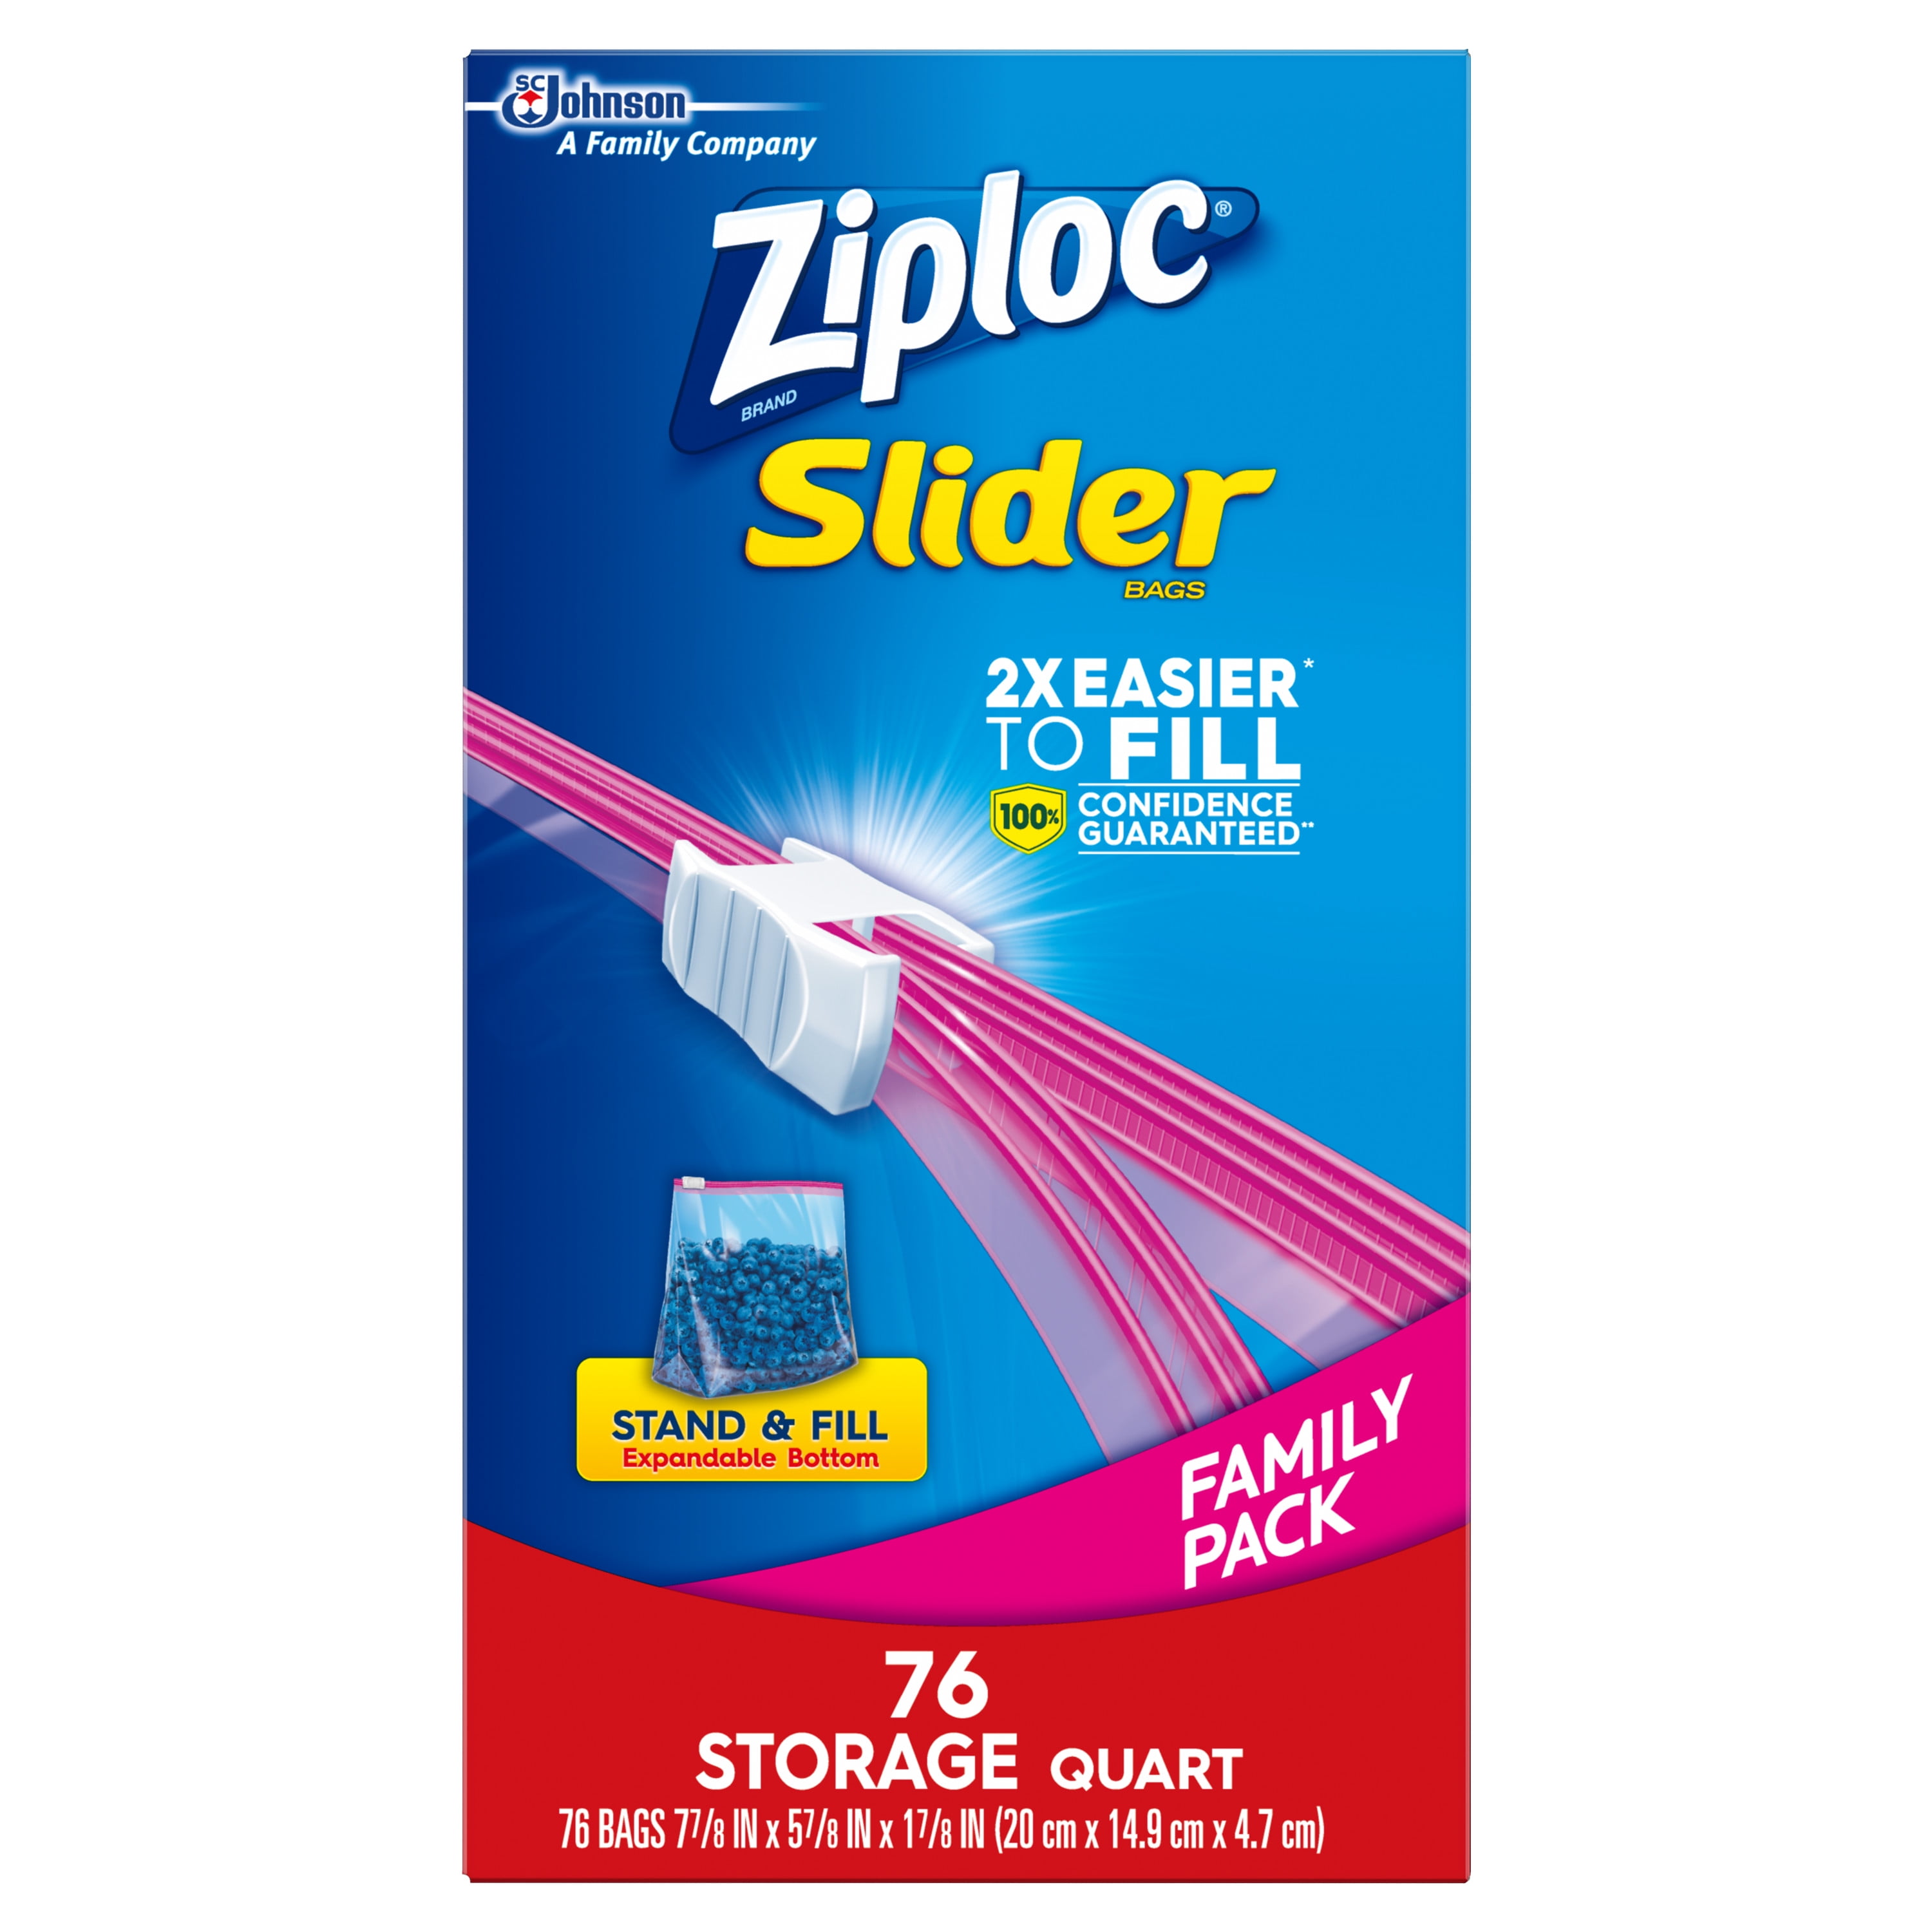 Ziploc Bags Limited Edition Holiday Quart Slider Qty 16 sealed box Sloth  Penguin